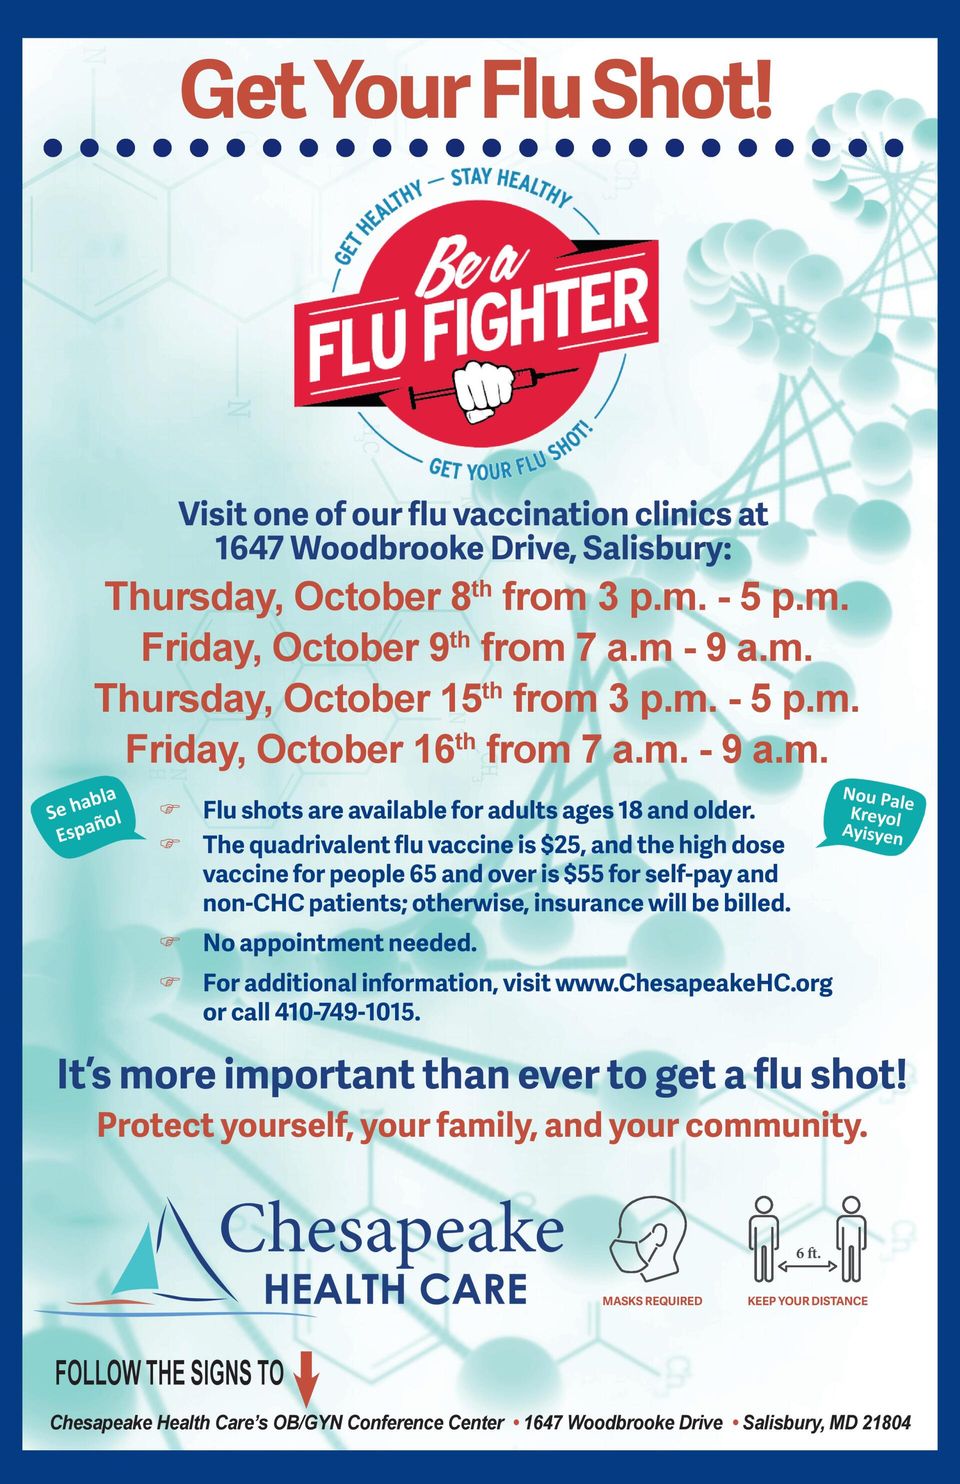 Get Your Flu Shot!